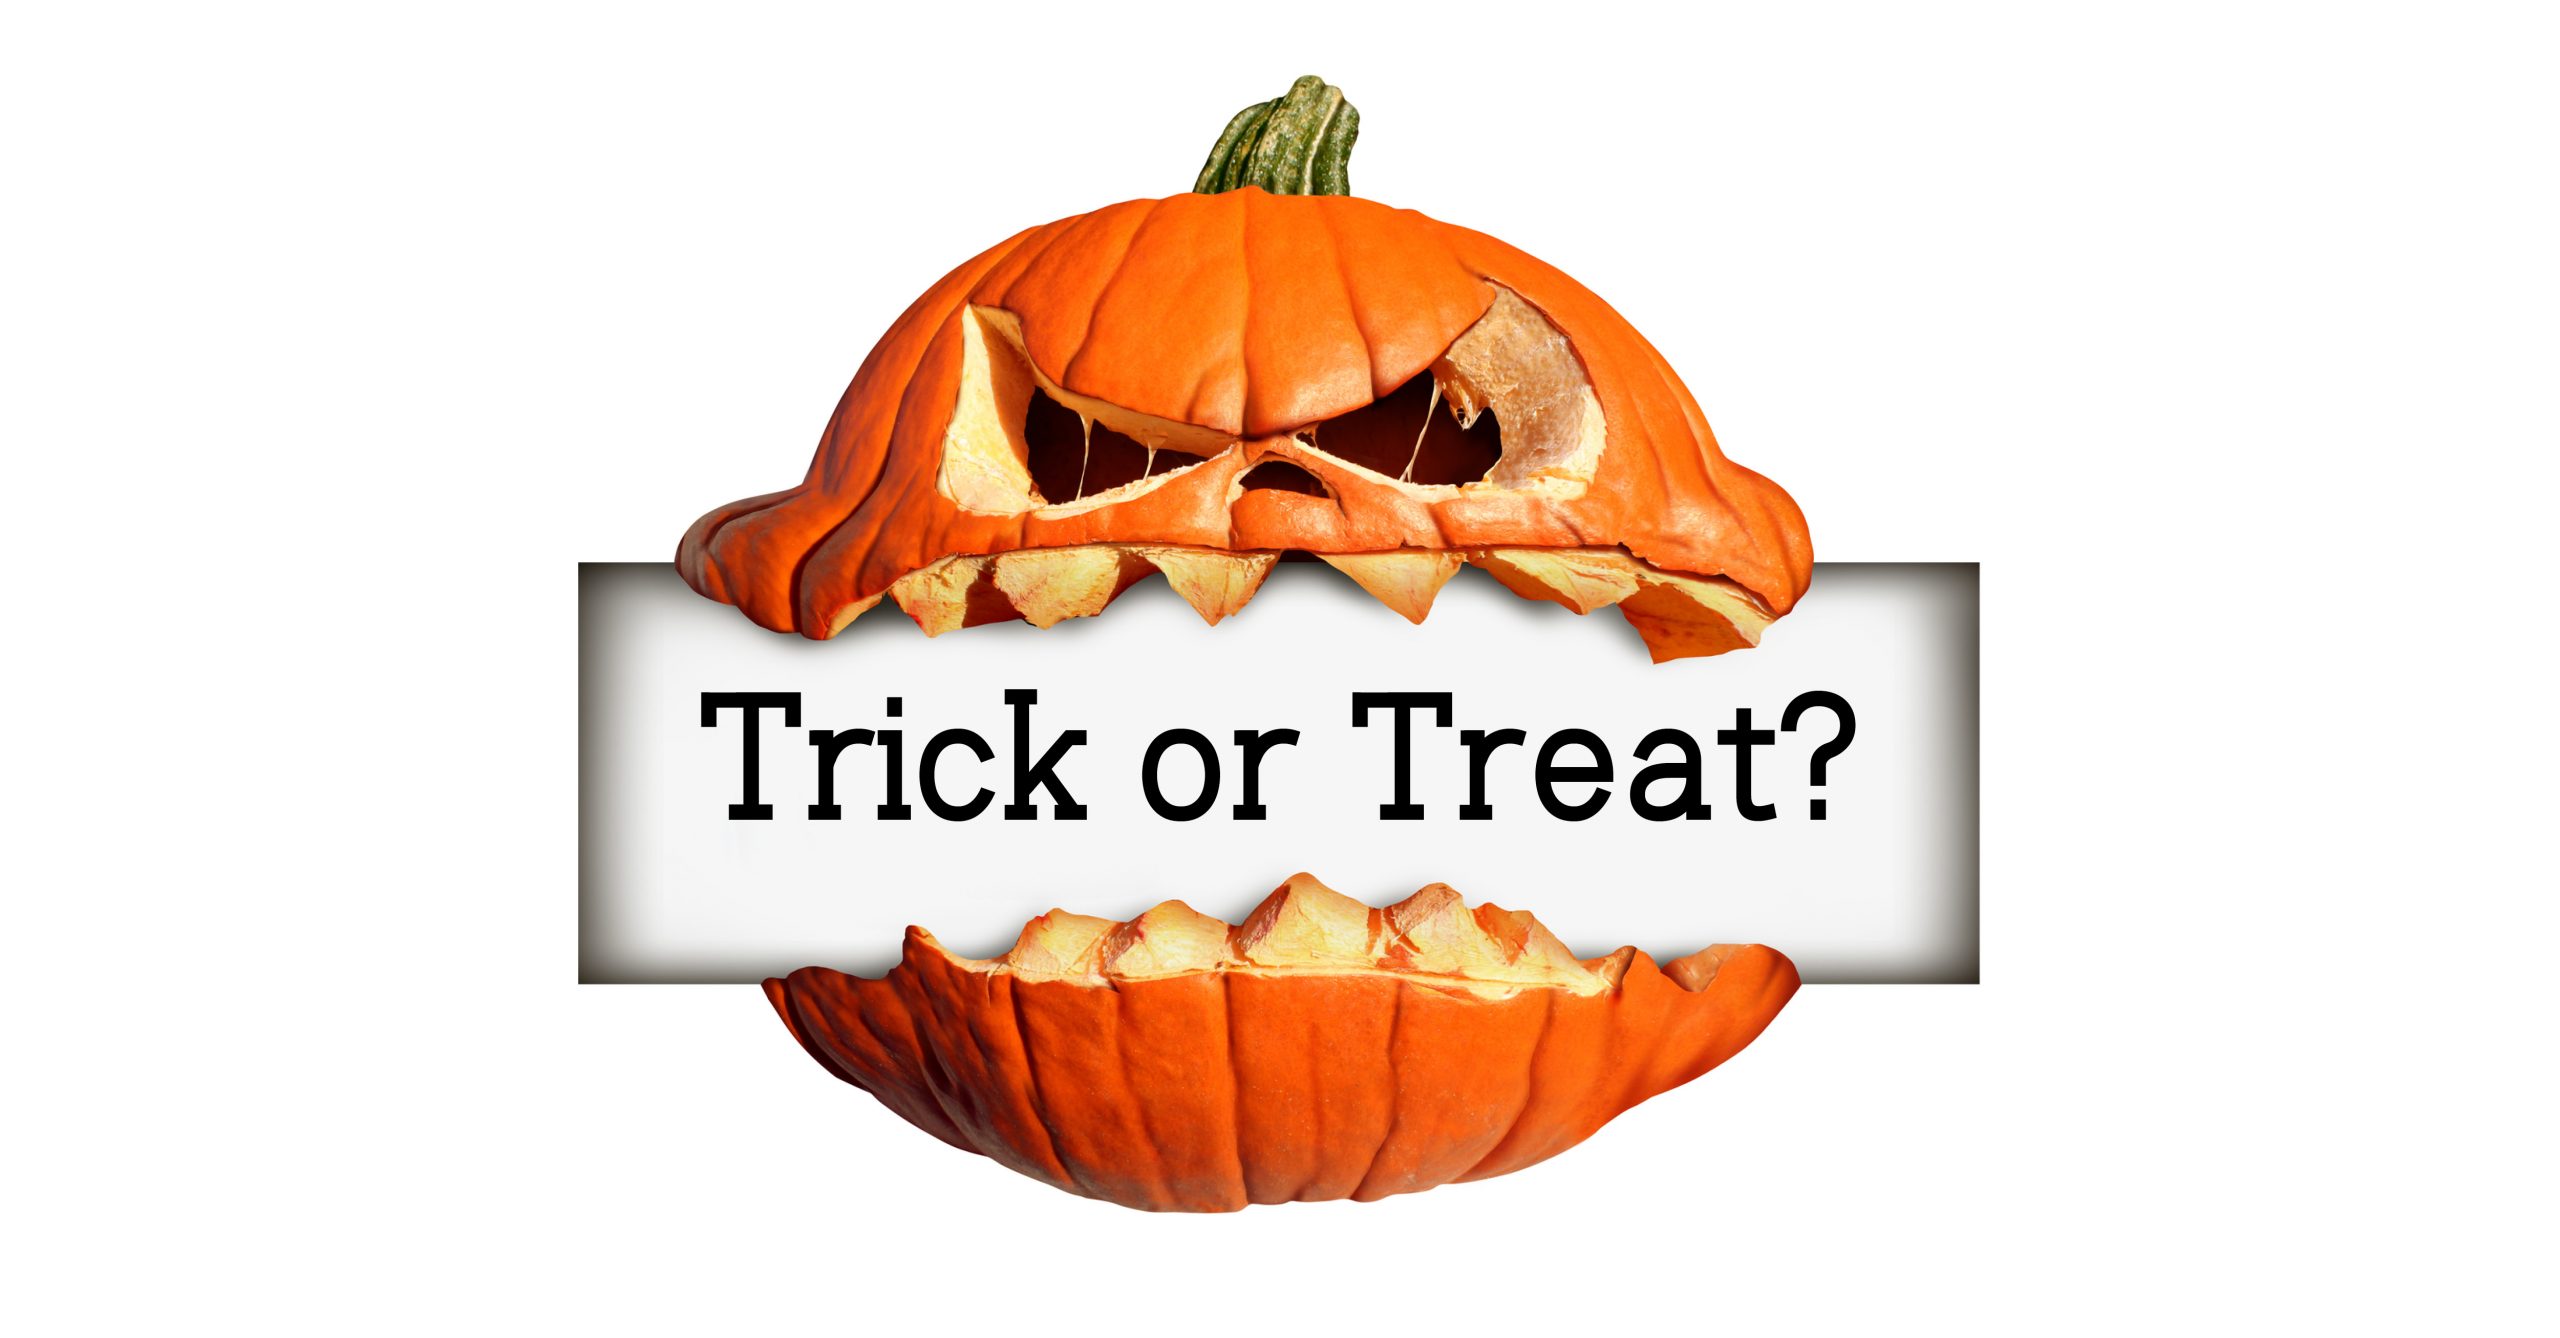 More Sweet Halloween Themed Marketing Ideas